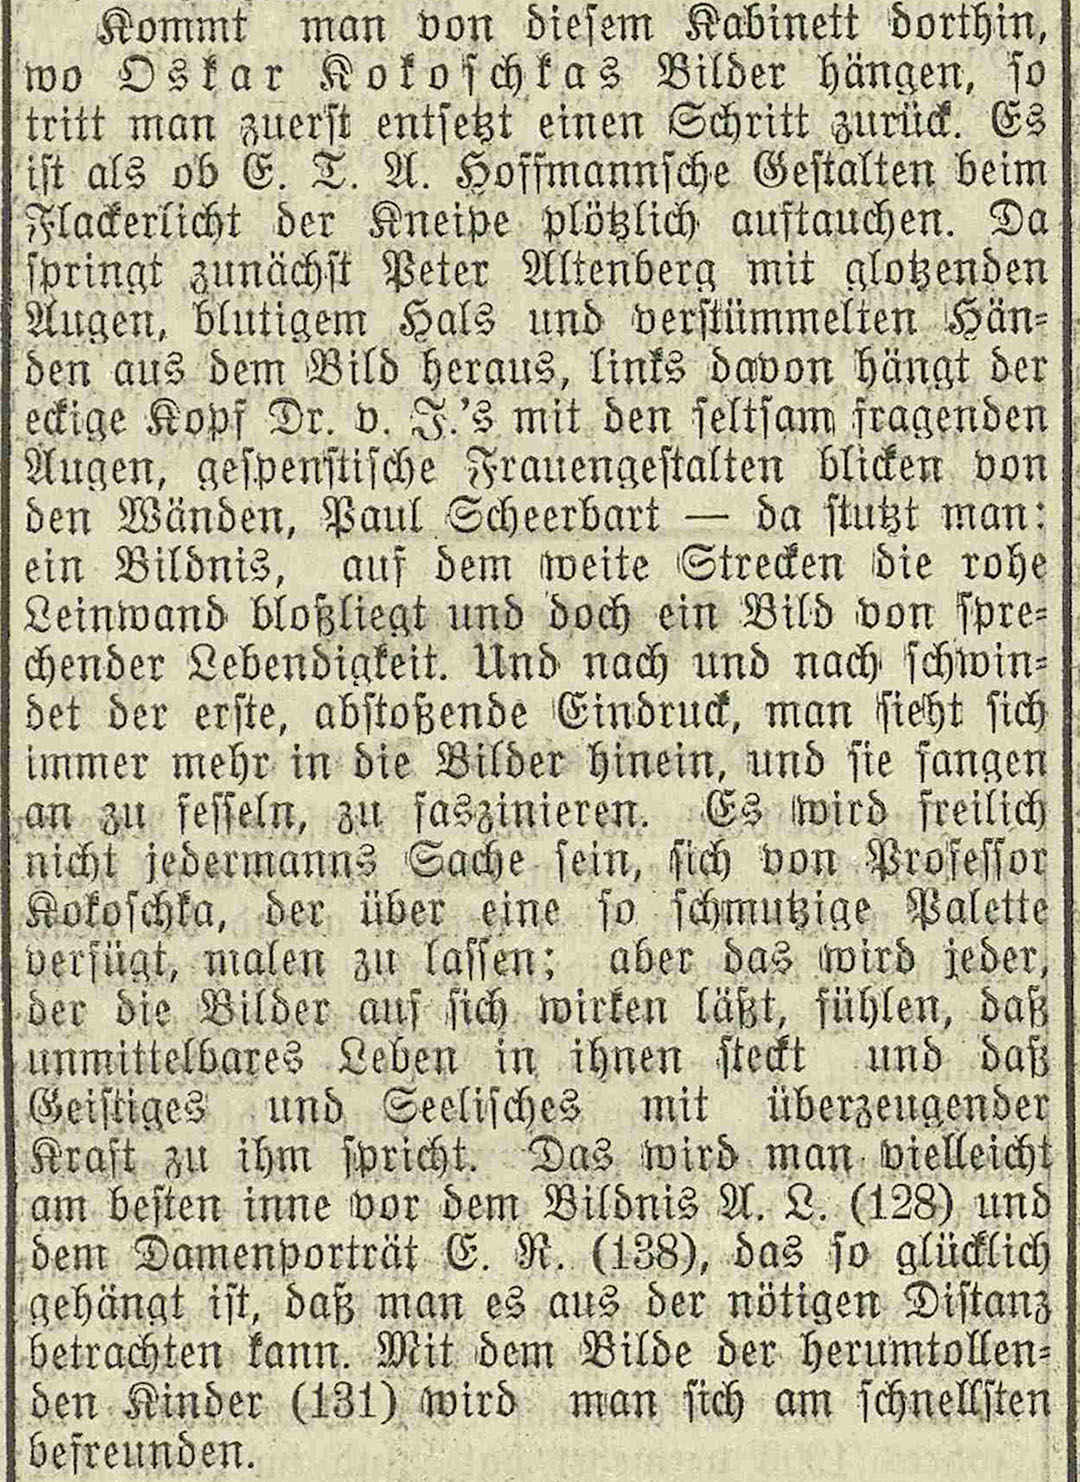 “Gradually, the initial sense of repulsion wanes [...]”: review in the “Züricher Post”, 30 May 1913, of Oskar Kokoschka’s portraits at the Kunsthaus (ZBZ)